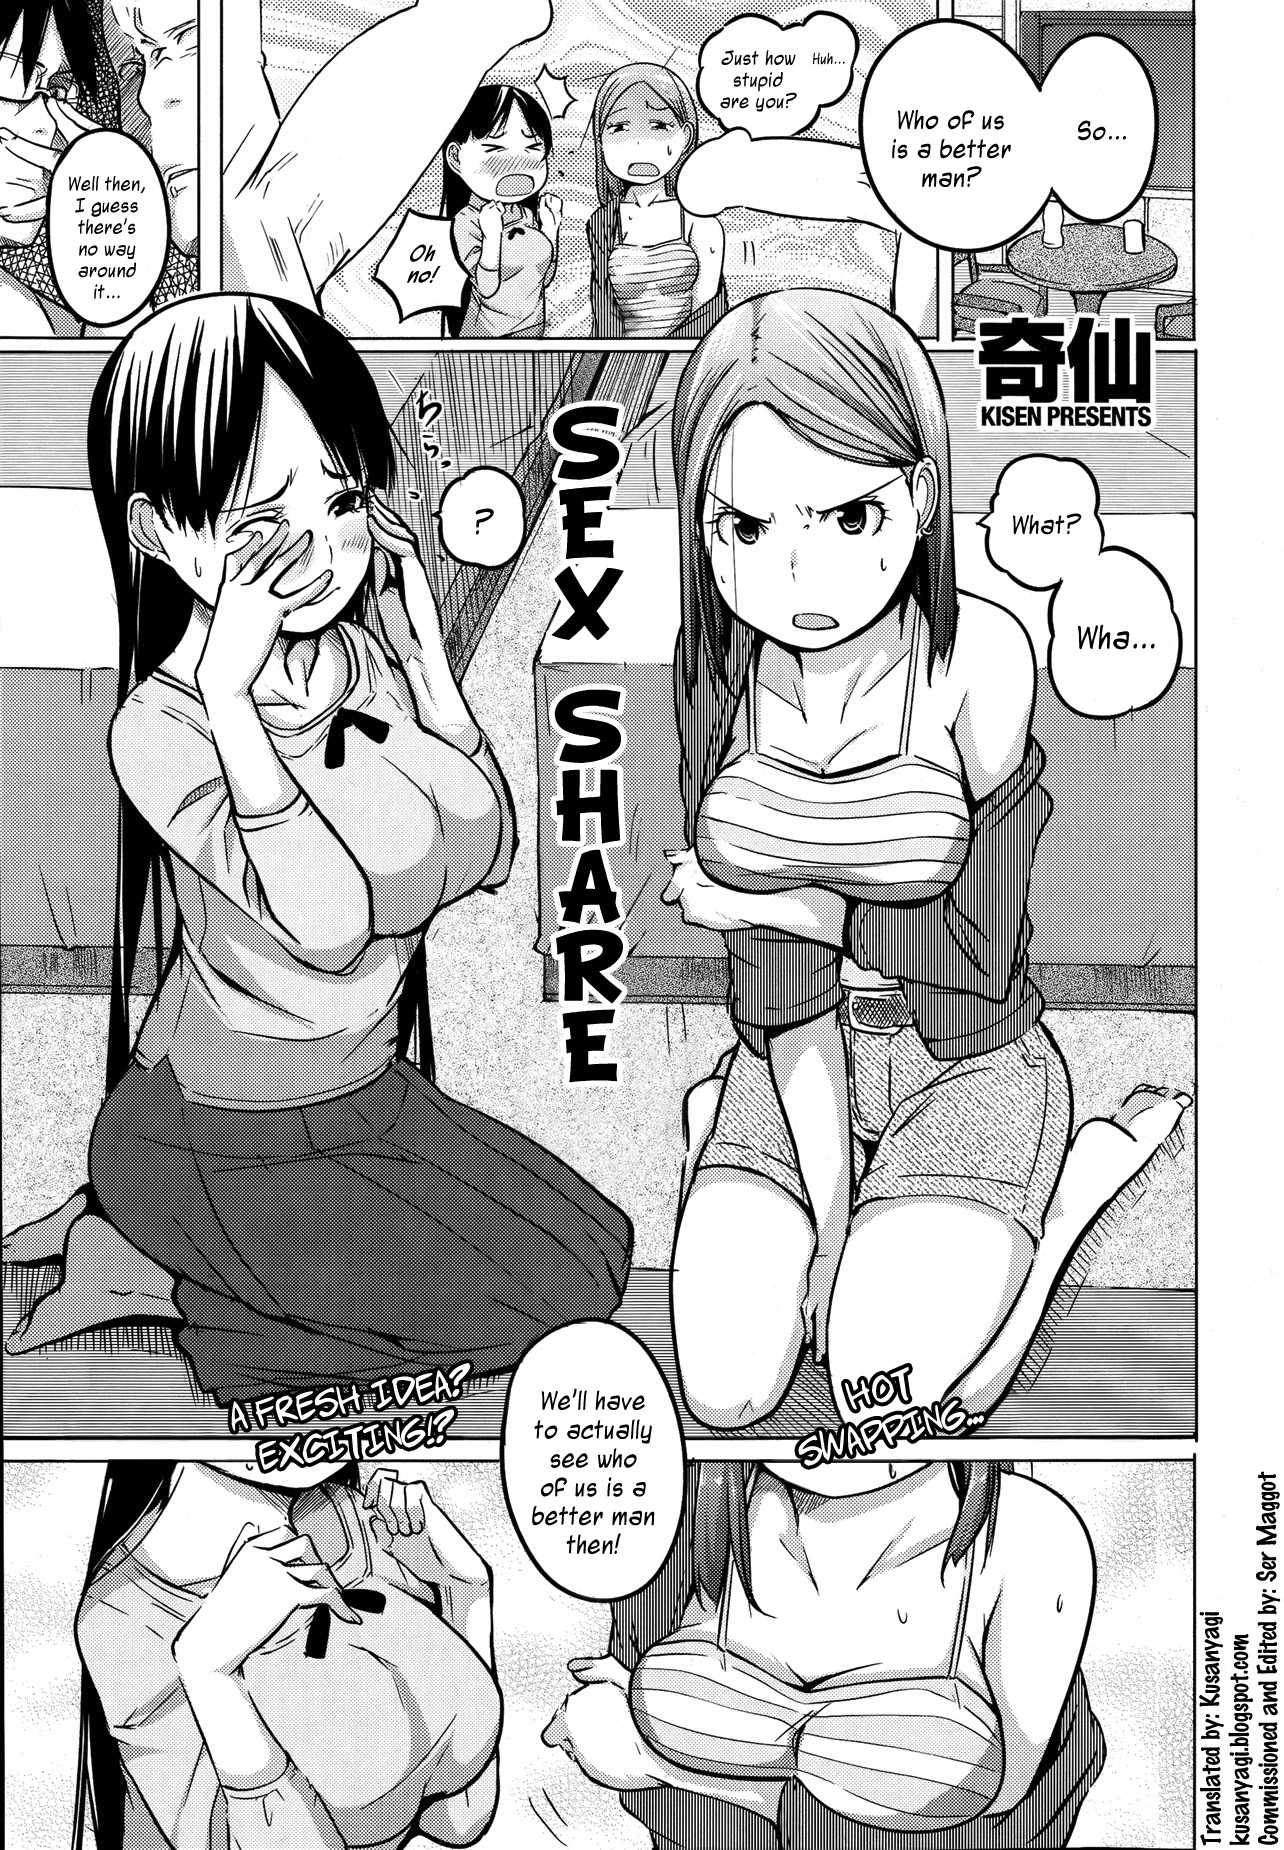 Reading Sex Share Original Hentai By Kisen 1 Sex Share [oneshot] Page 1 Hentai Manga Online